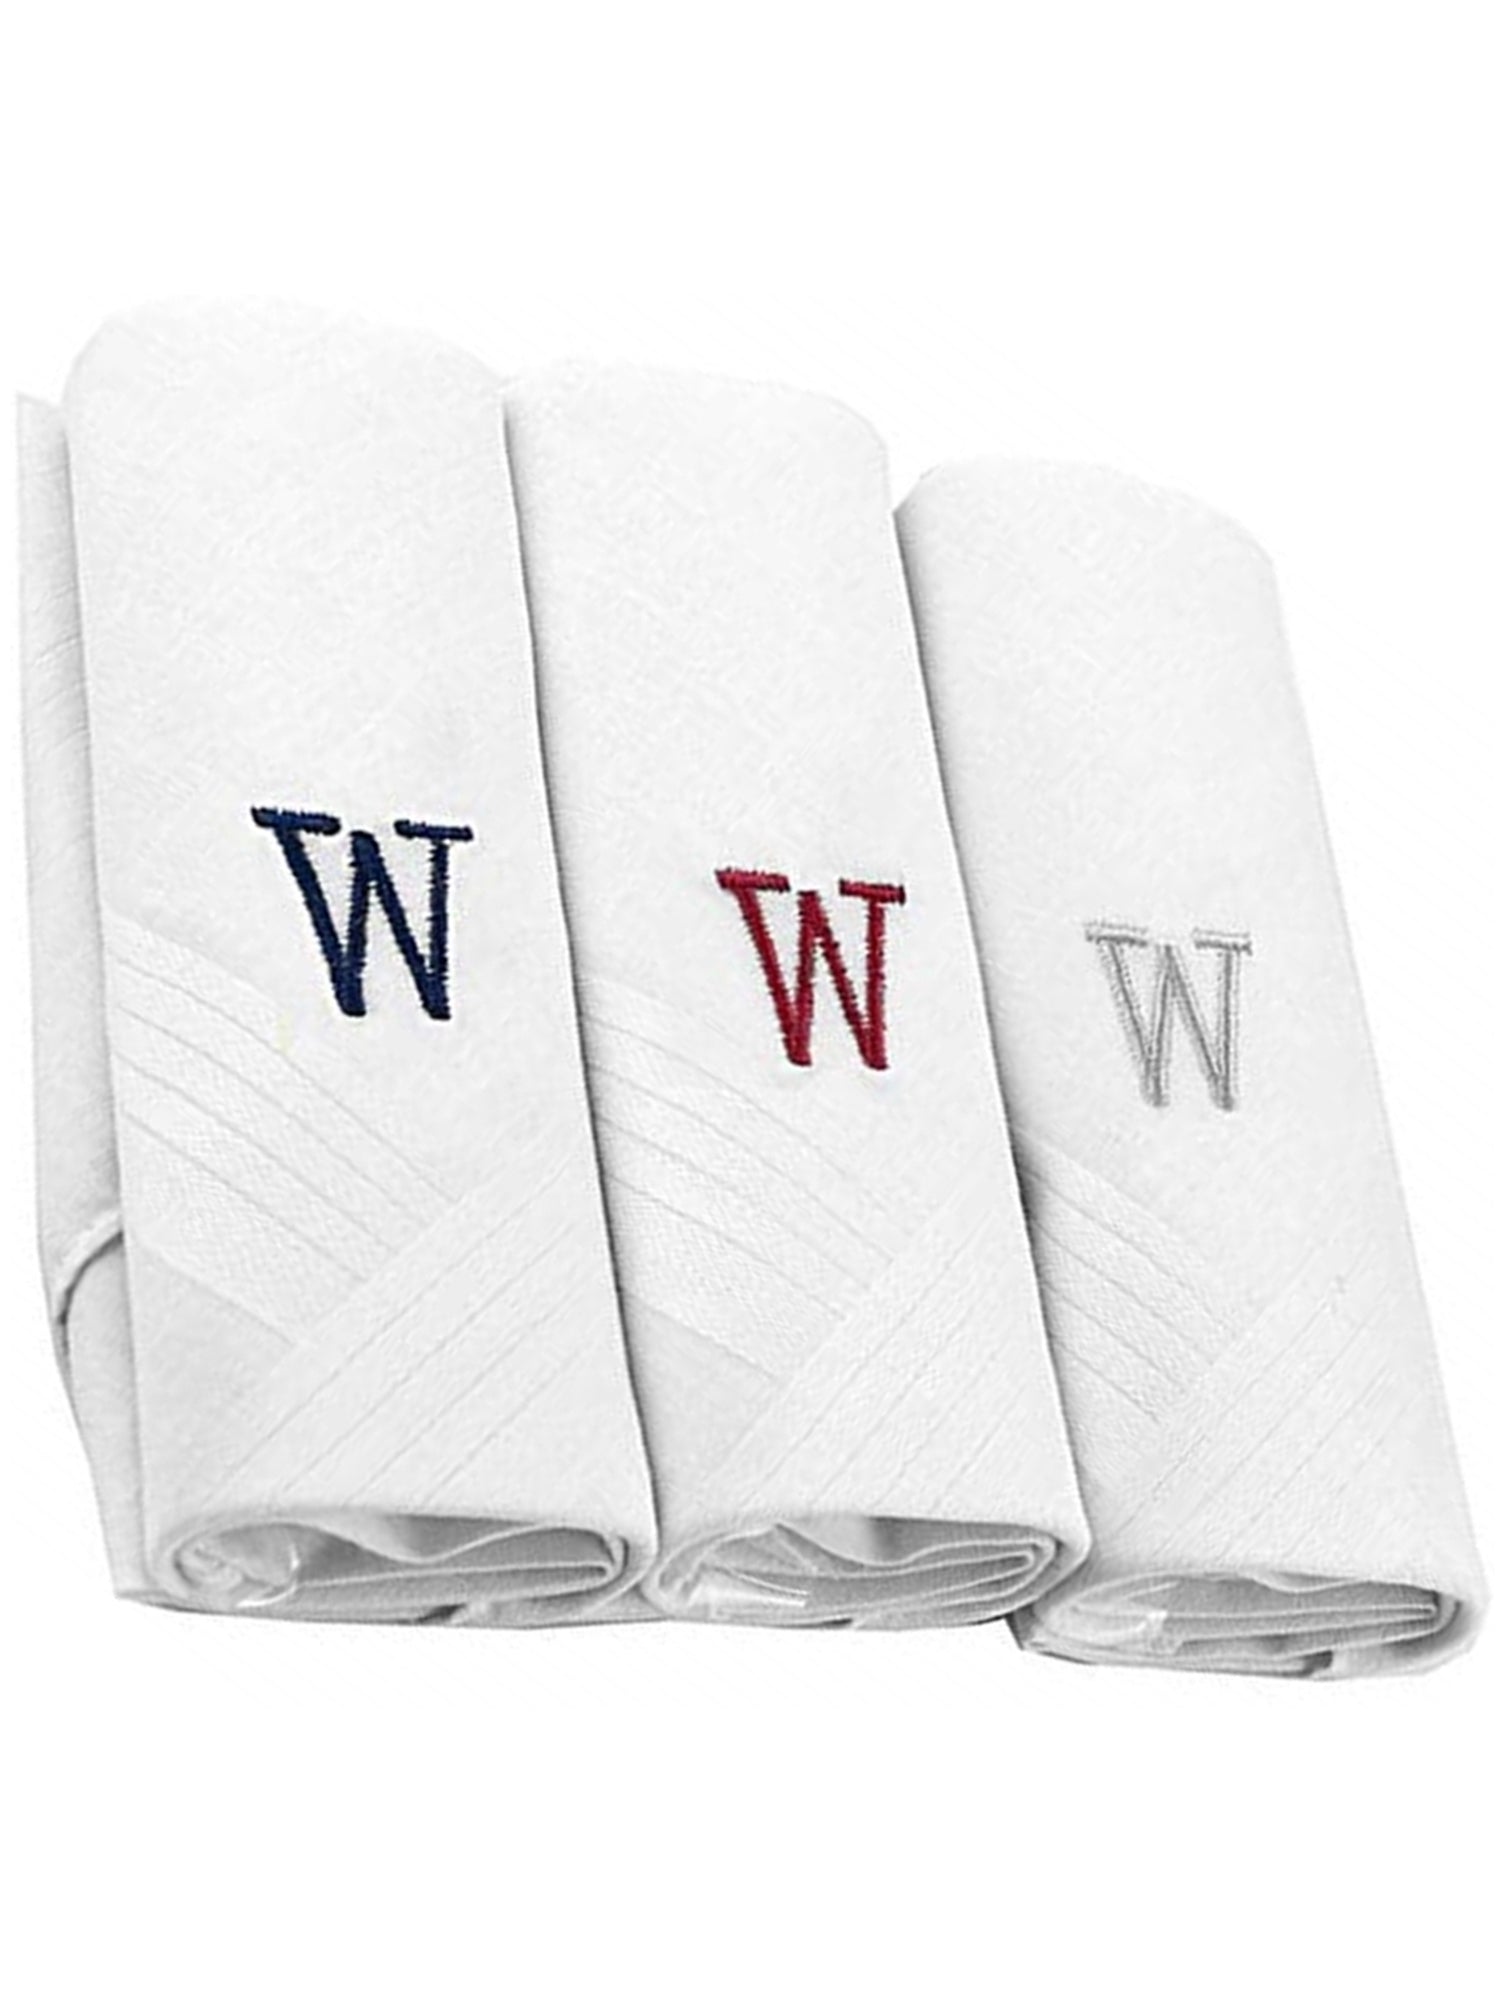 Men's Cotton Monogrammed Handkerchiefs Initial Letter Hanky Handkerchiefs TheDapperTie White W 2 x 3 Pack  